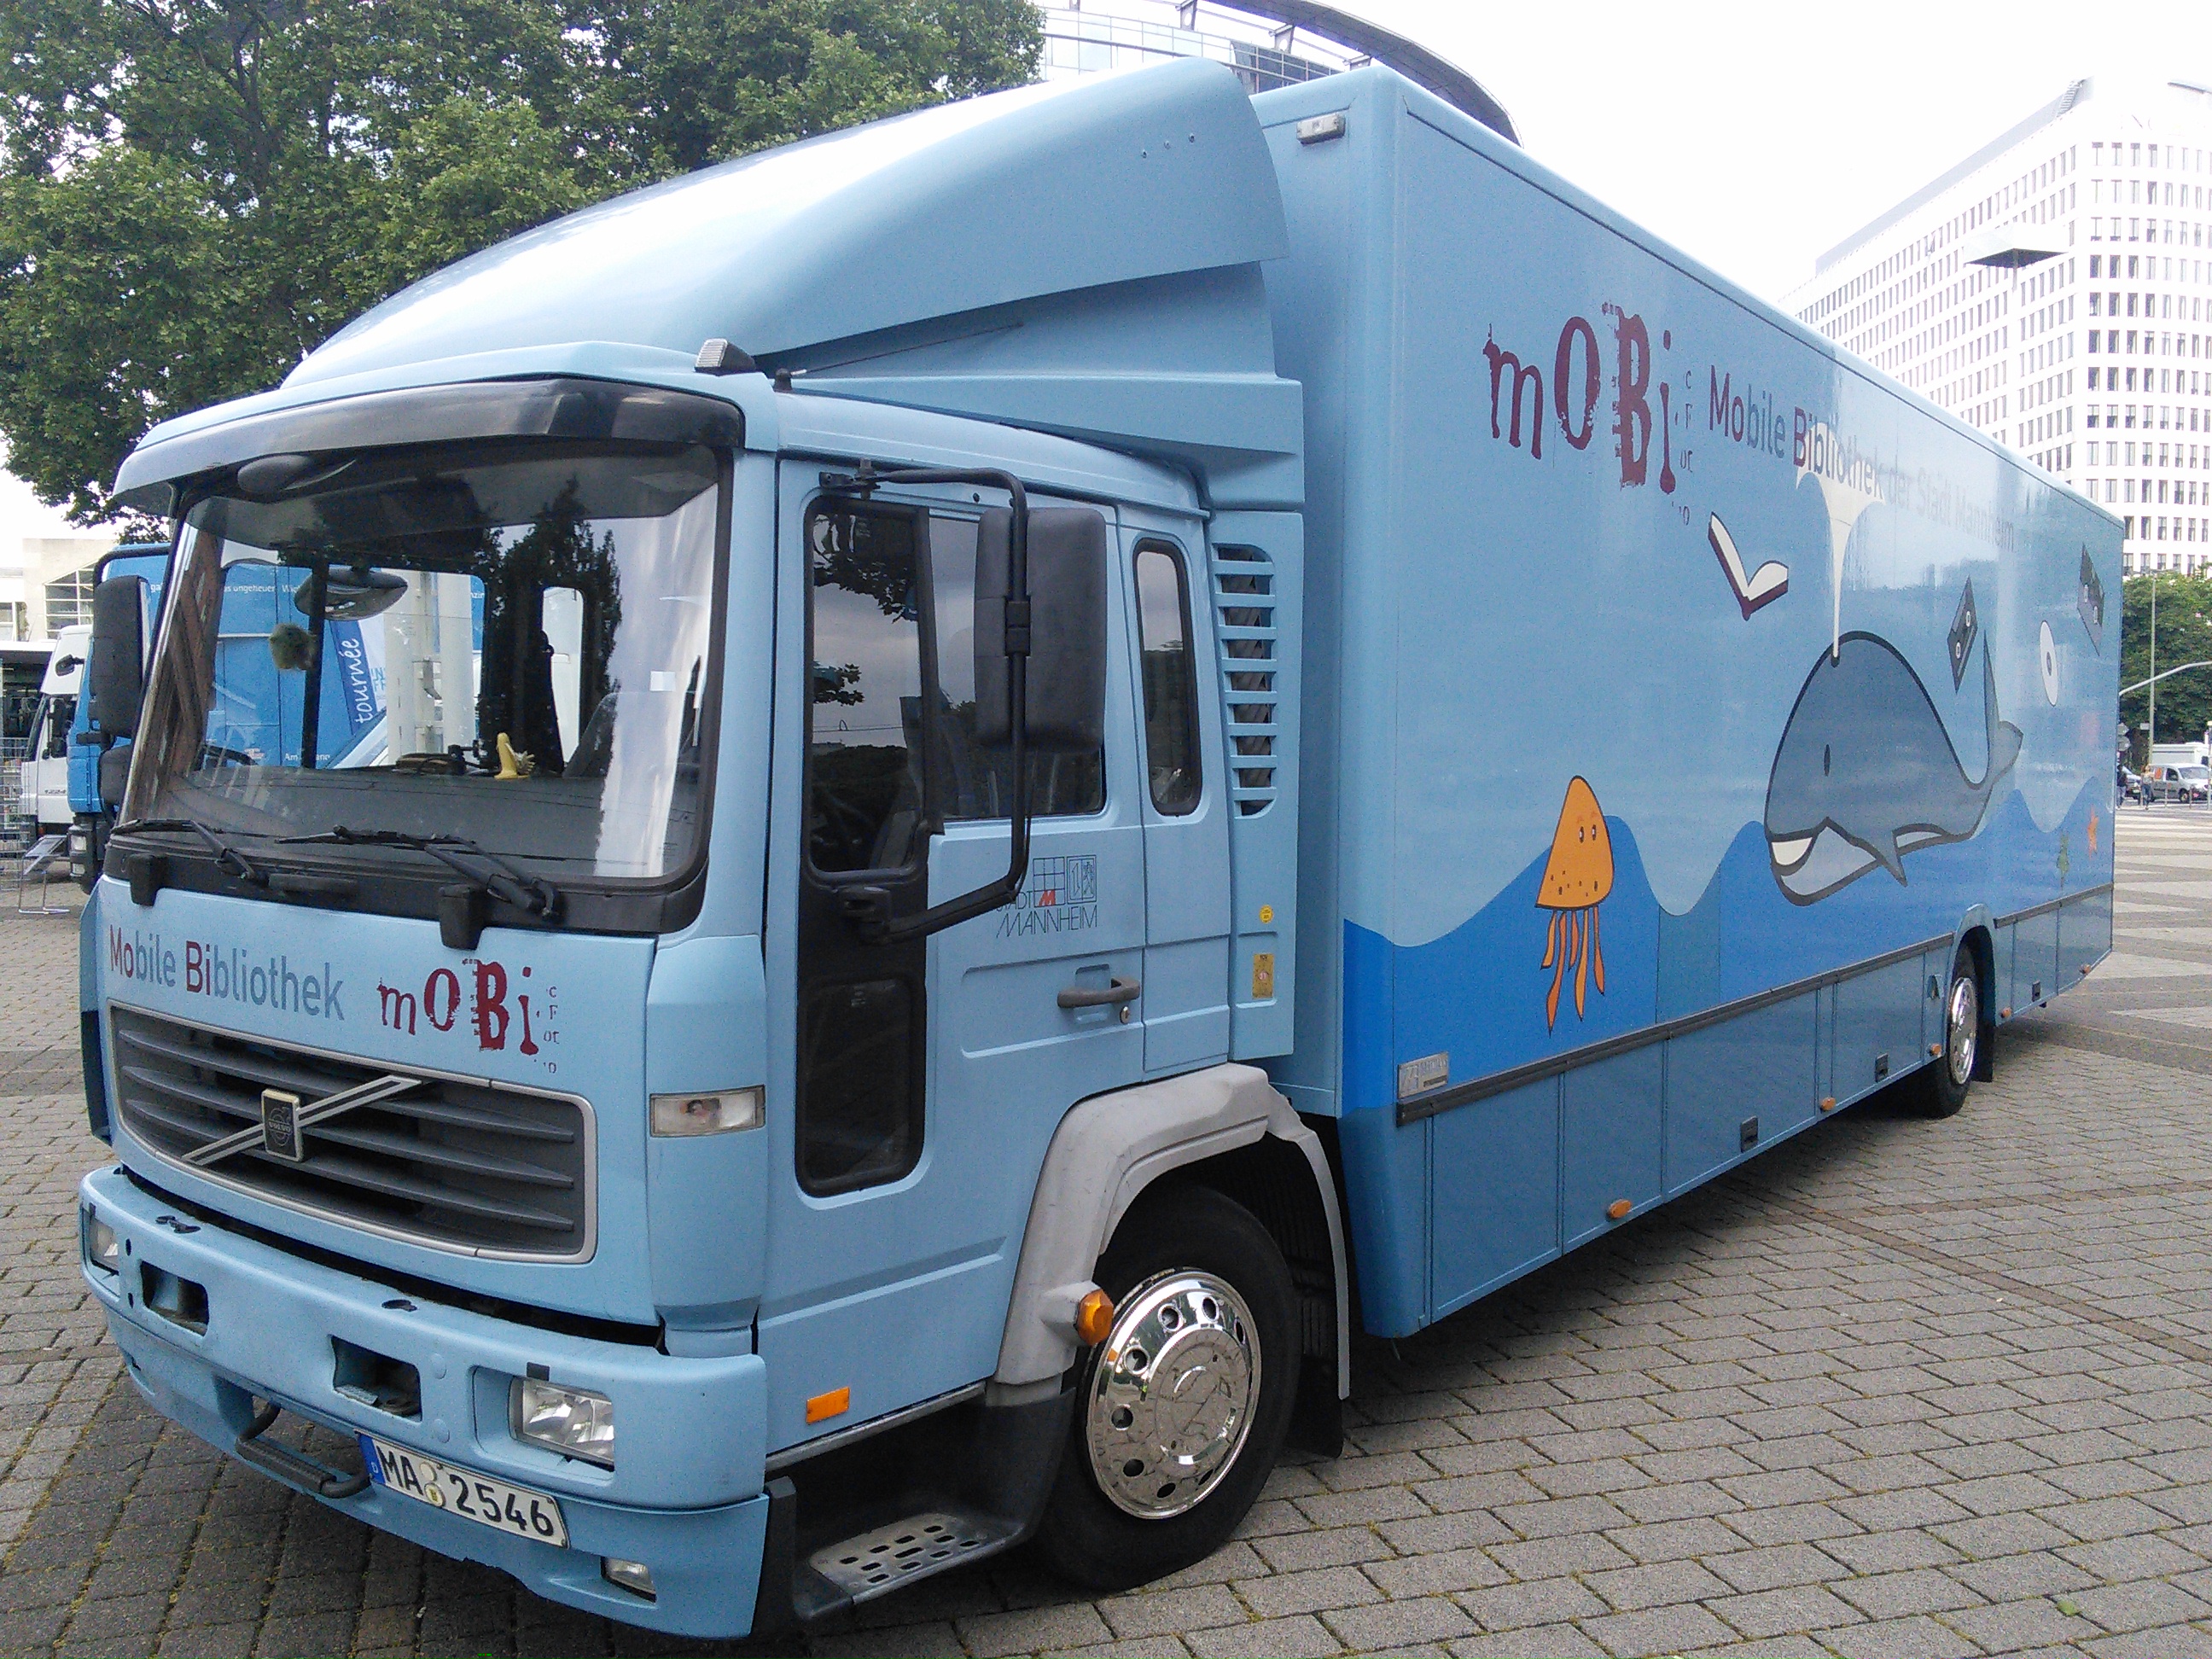 Mobile Bibliothek Mannheim ("mobi")